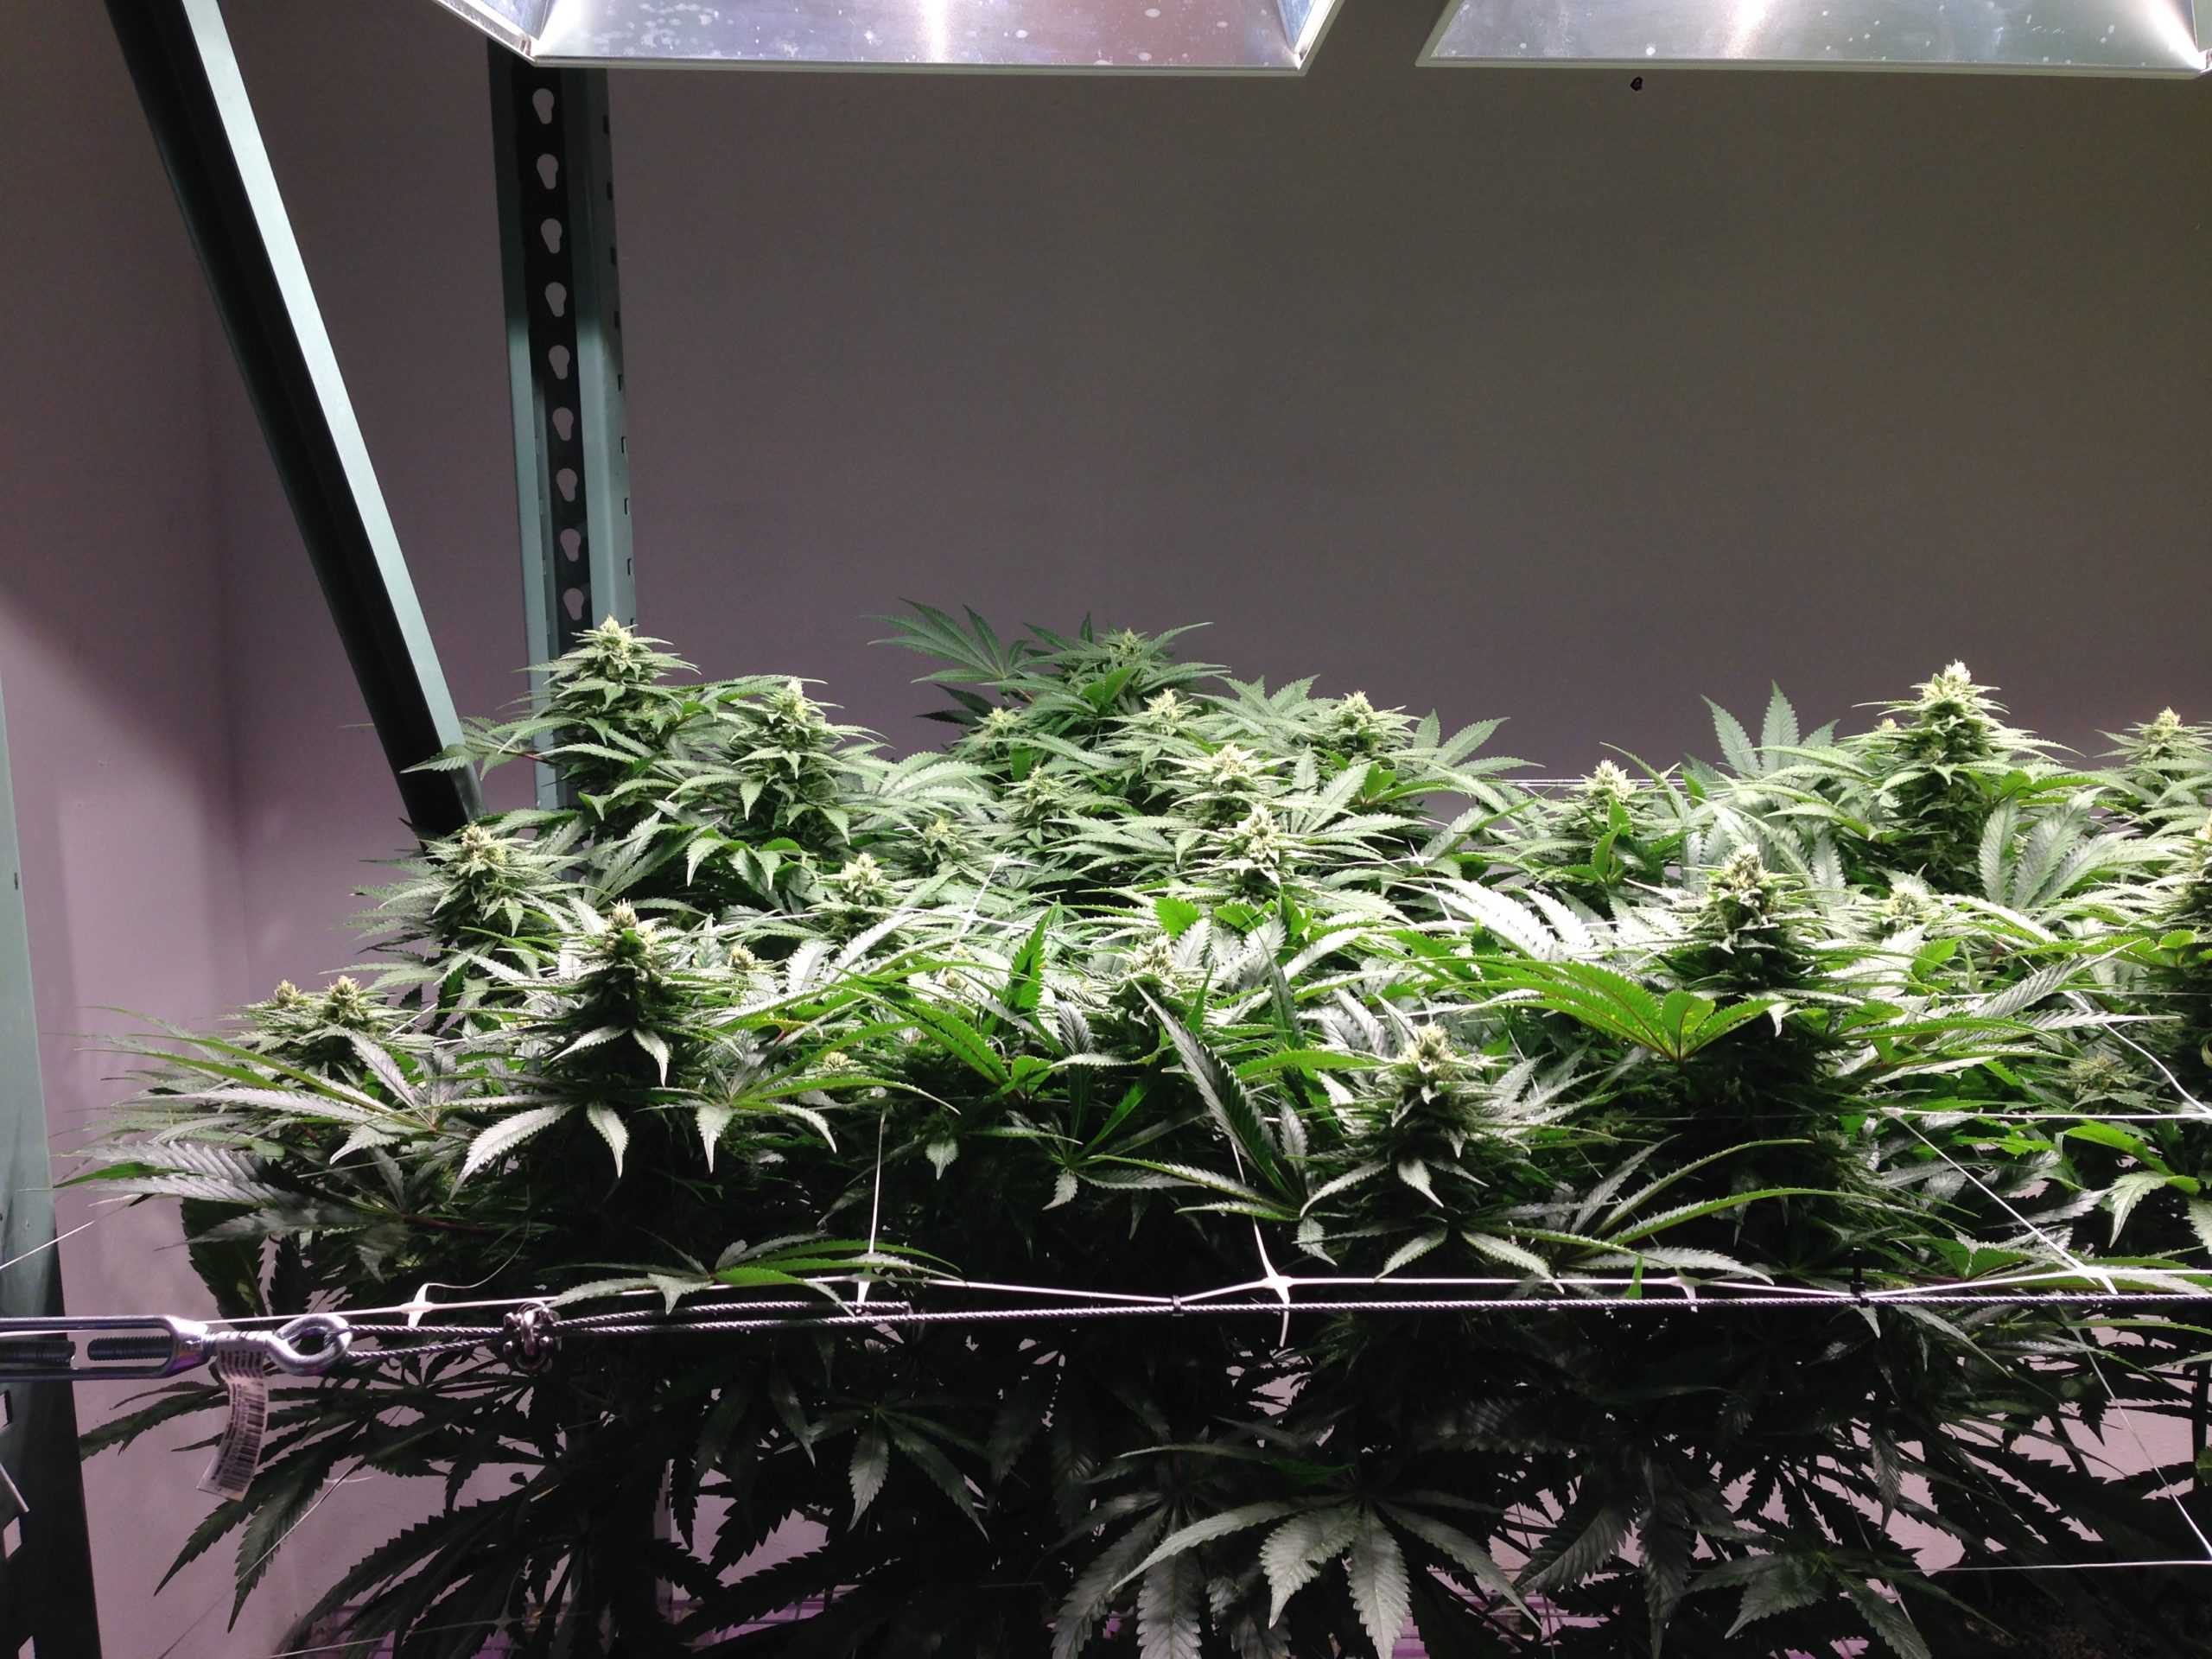 5 x 5 footprint for growing cannabis